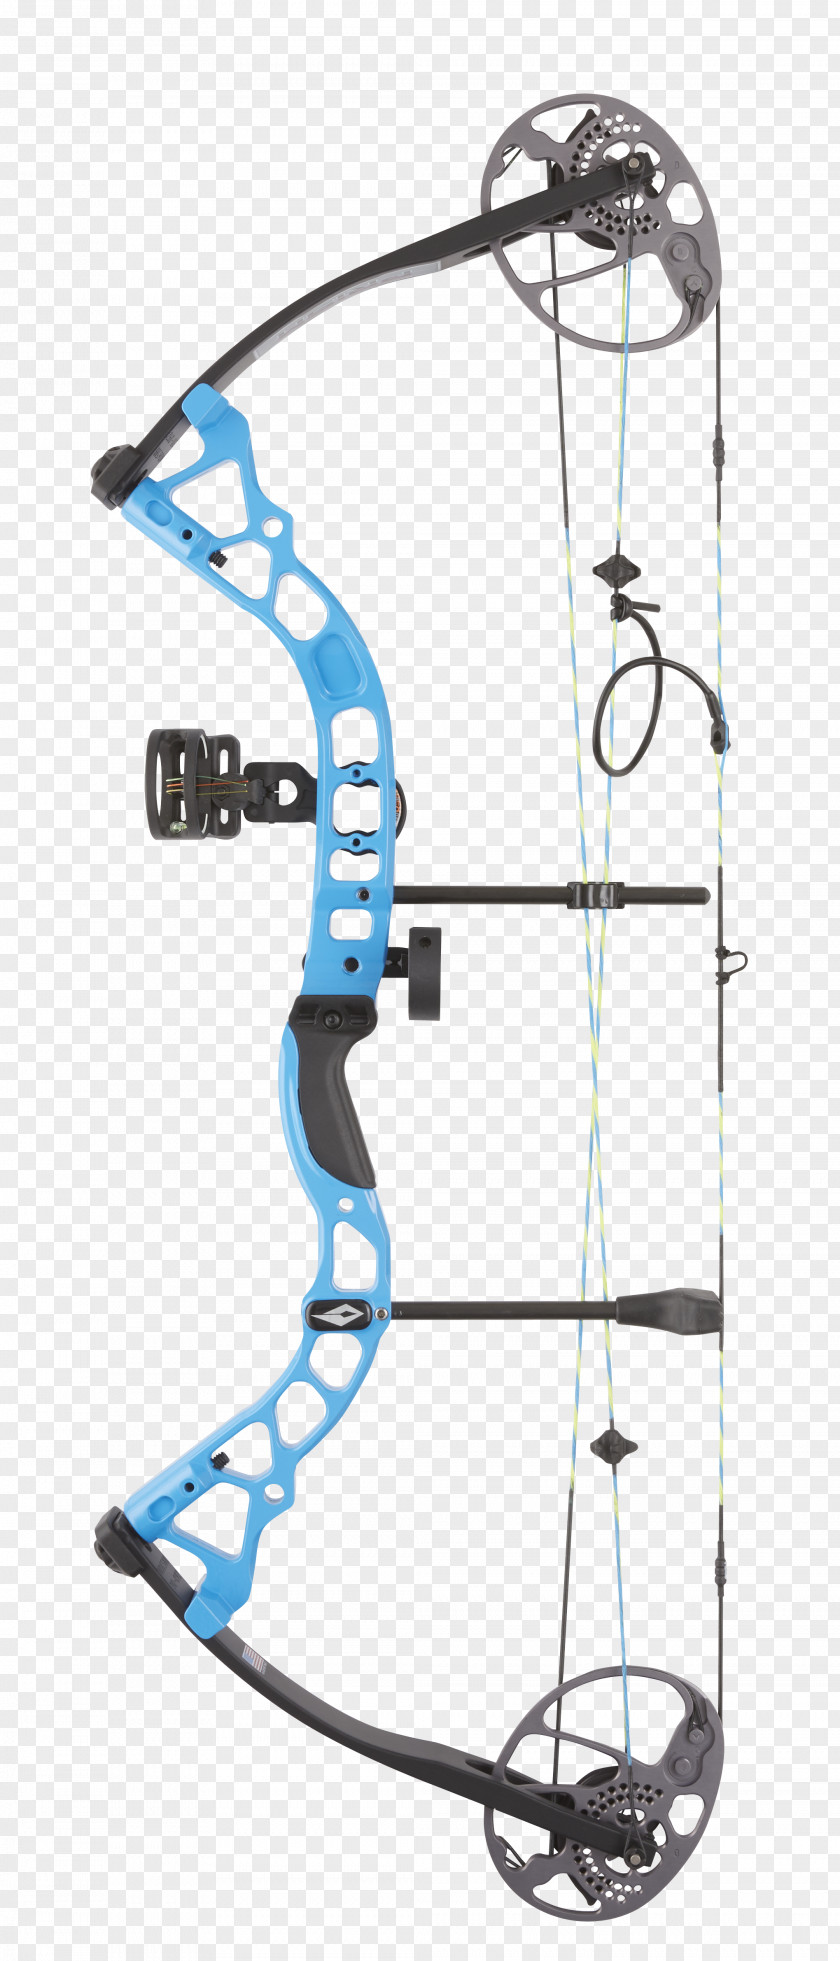 Competition Archery Equipment Diamond Prism Bow Package Compound Bows Infinite Edge Pro SB-1 BOWTECH, INC PNG